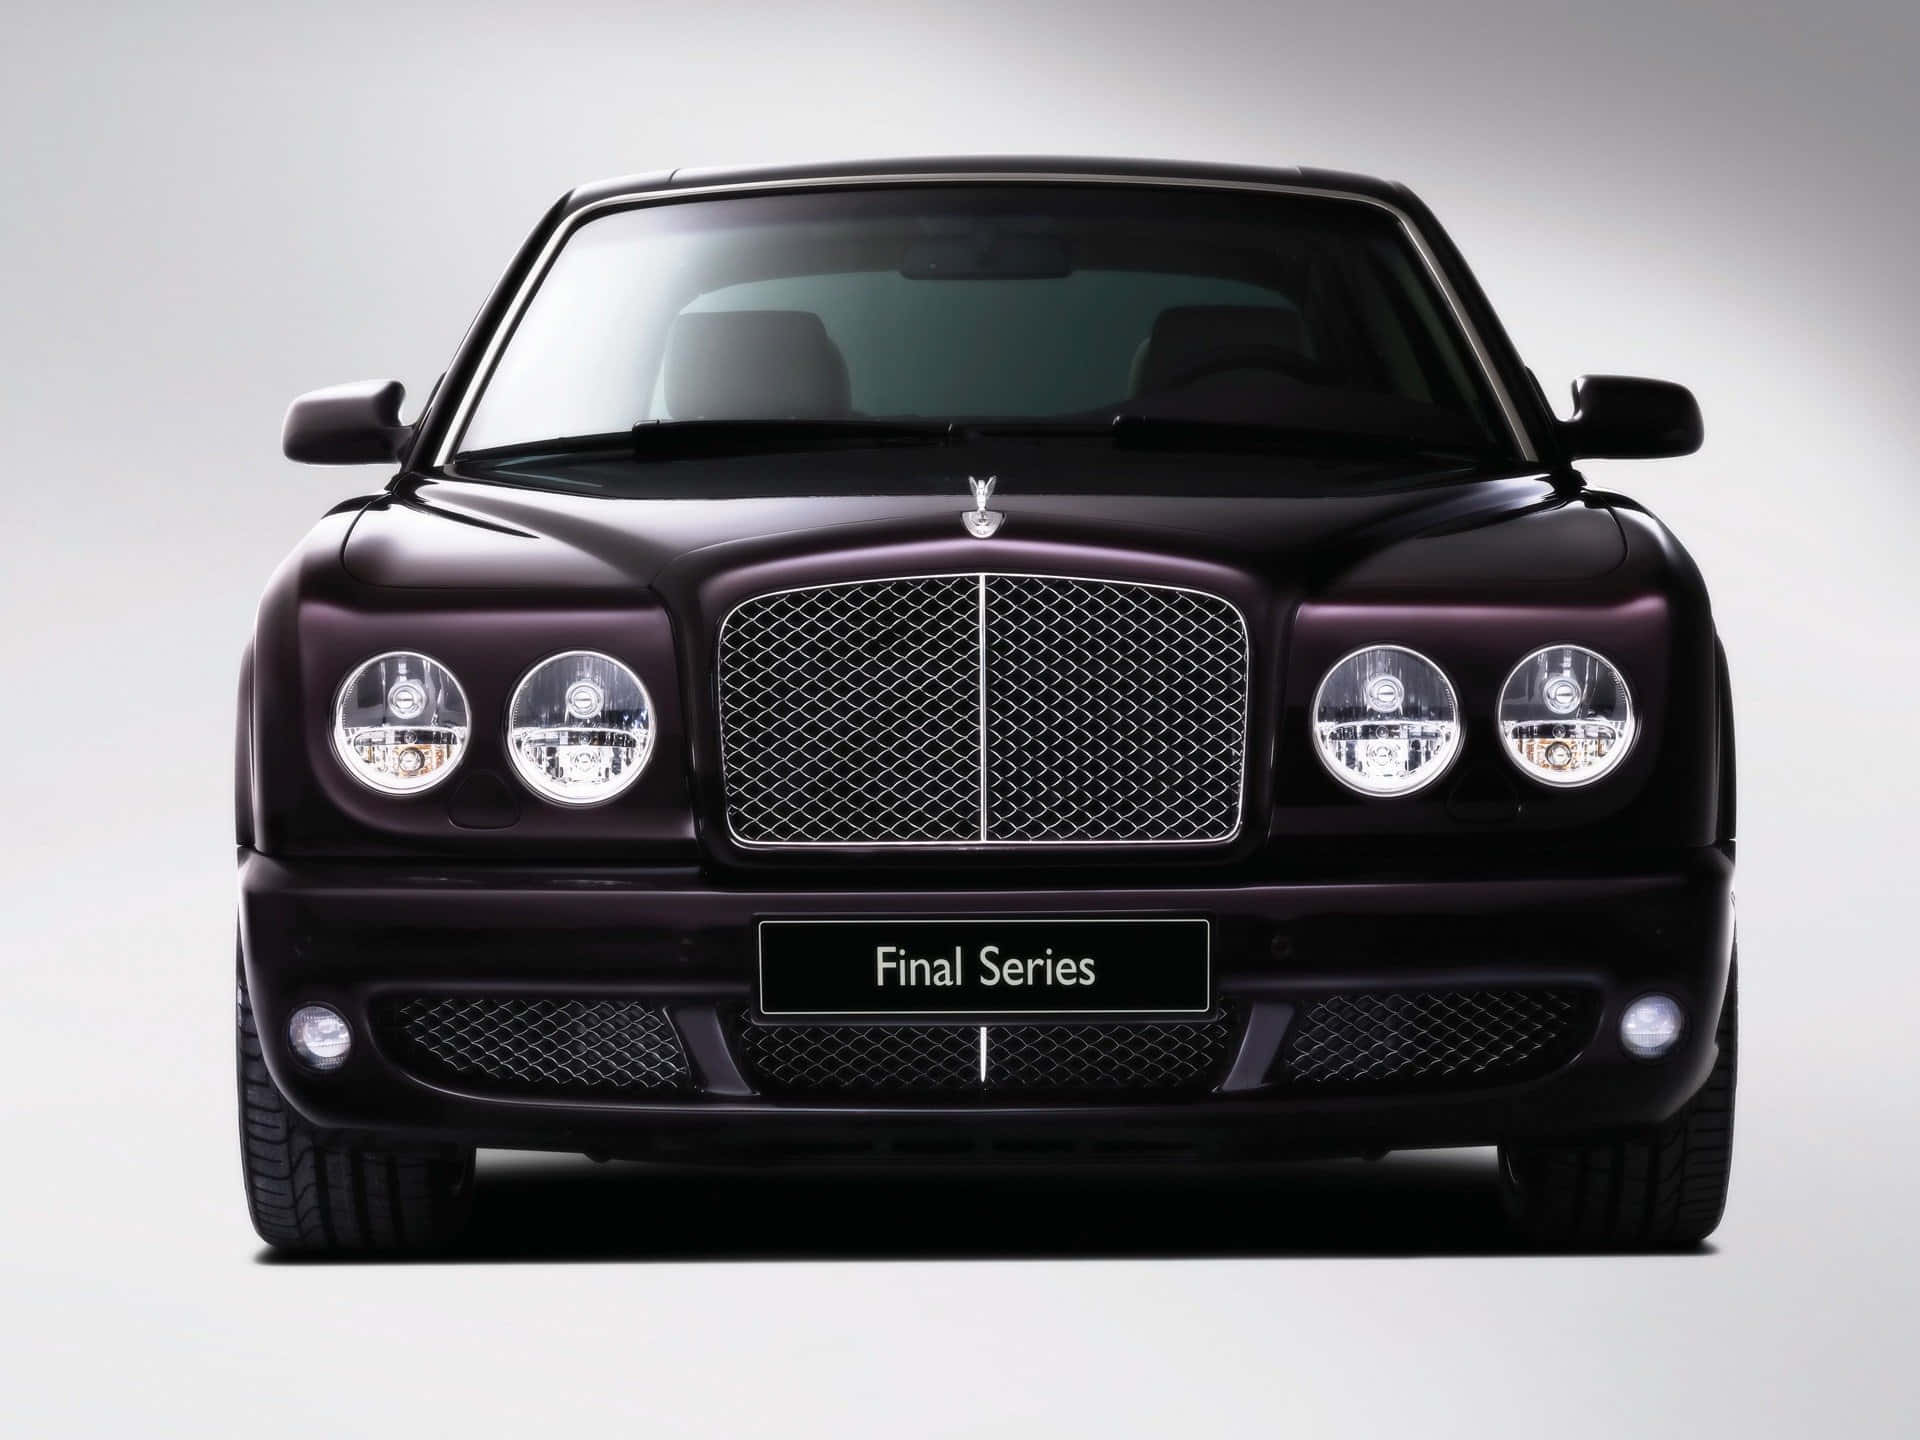 Iconic British Luxury - An Old Bentley Wallpaper